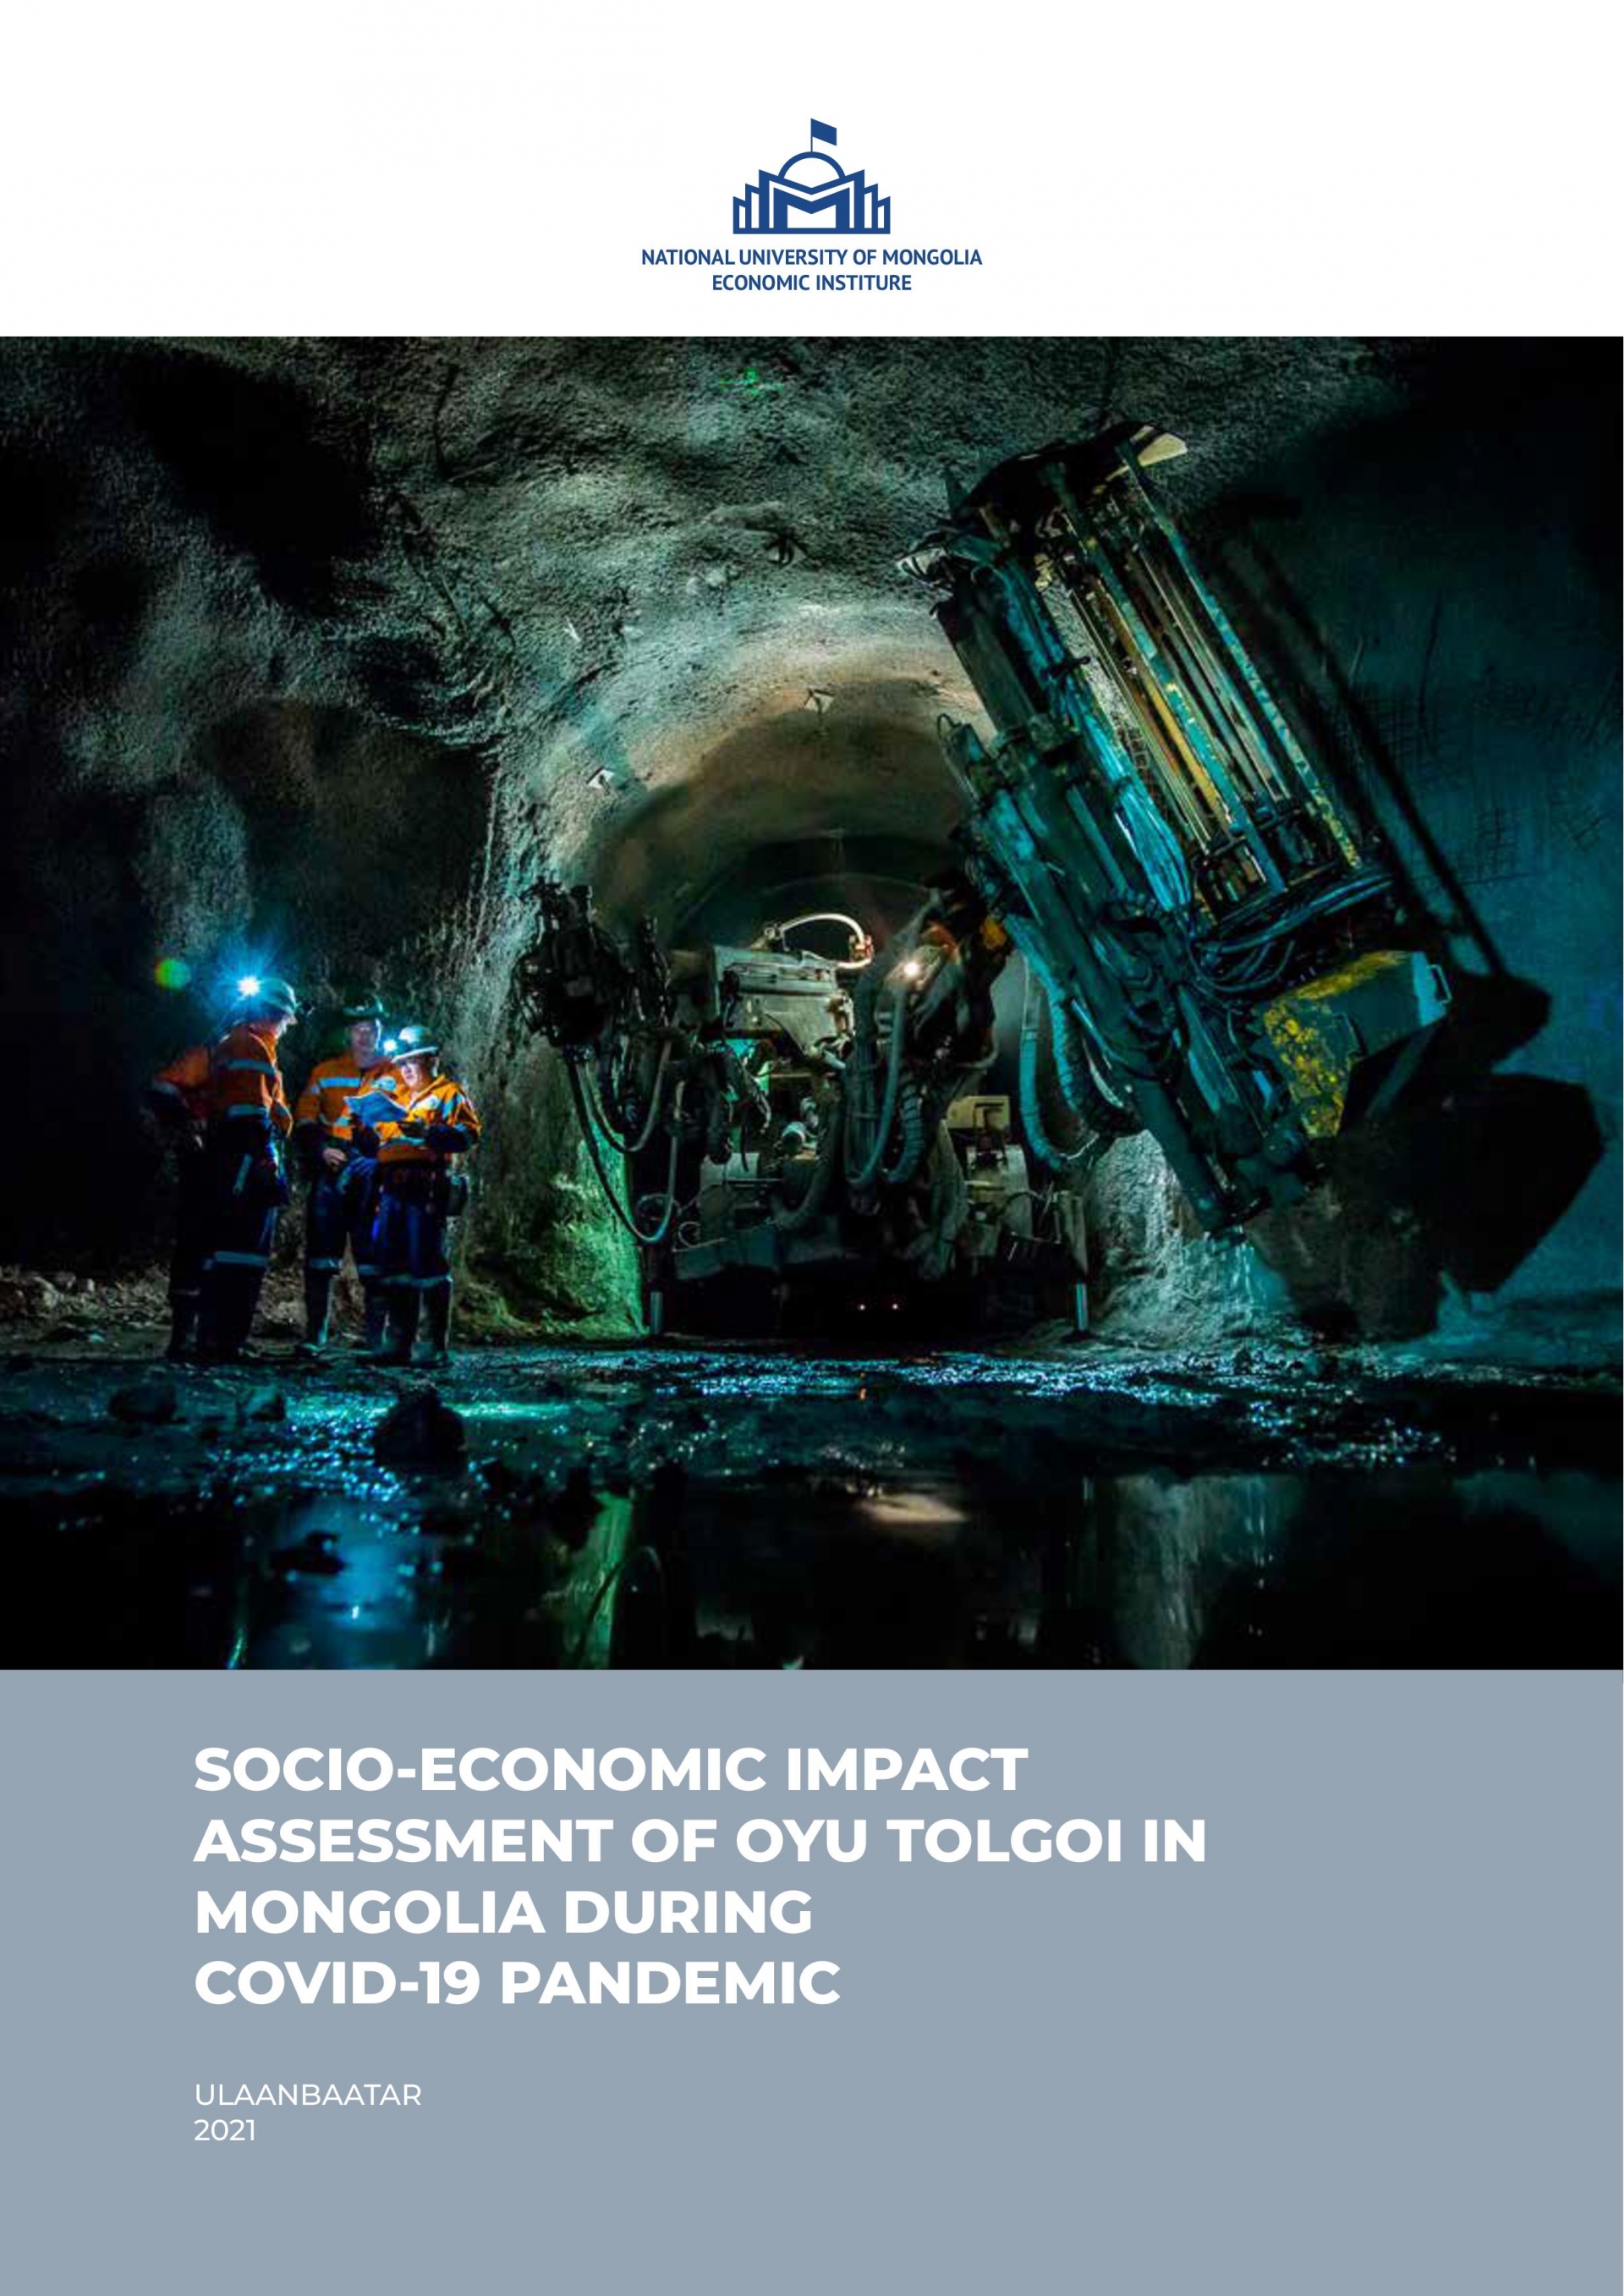 SOCIO-ECONOMIC IMPACT ASSESSMENT OF OYU TOLGOI IN MONGOLIA DURING COVID-19 PANDEMIC